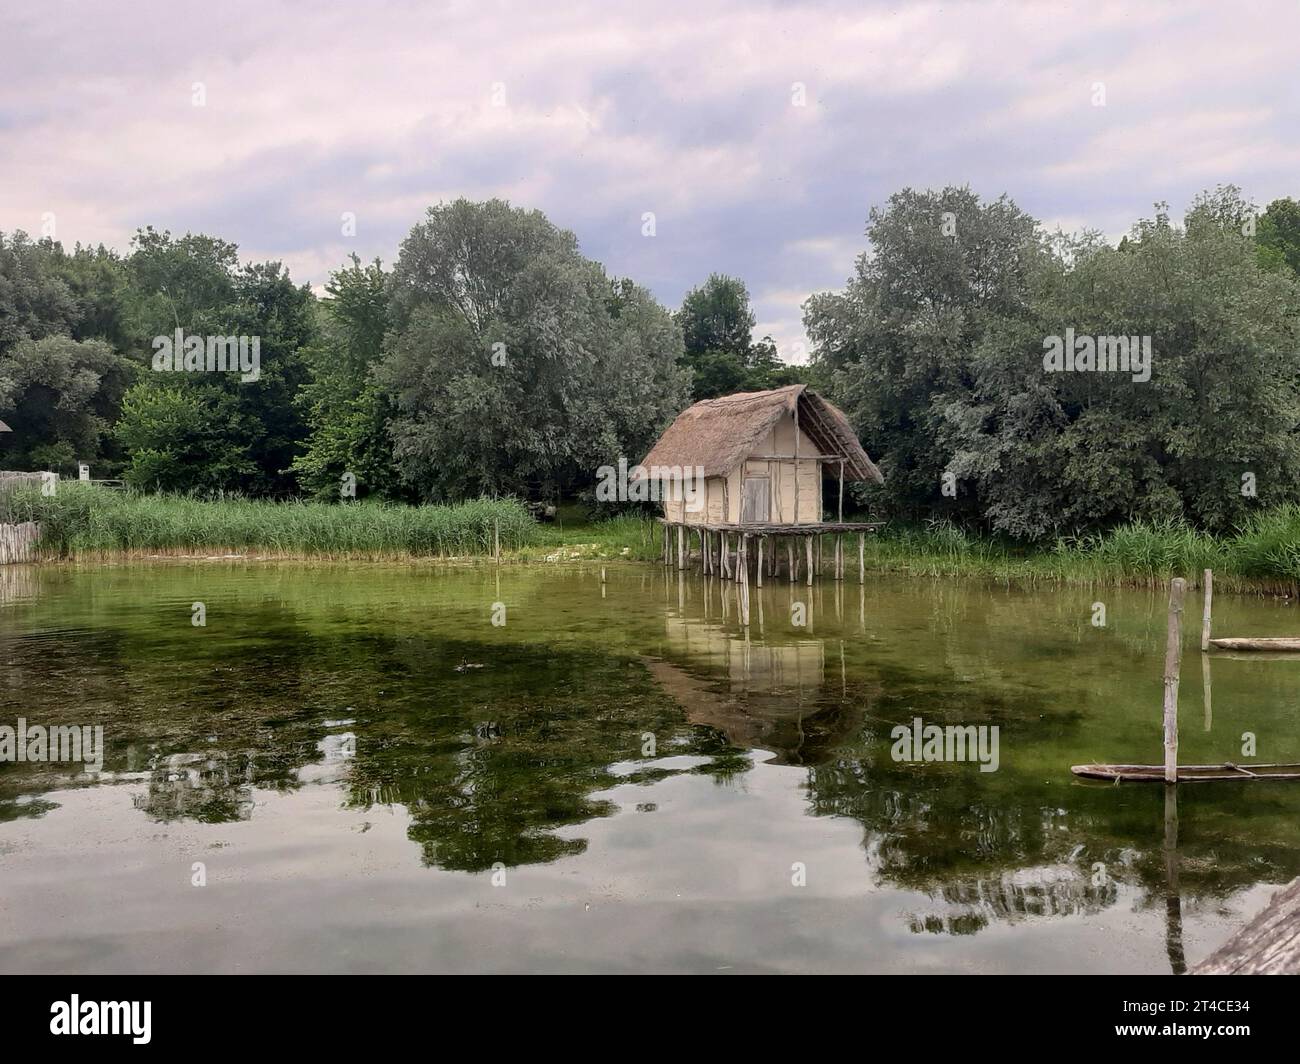 Lake Dwelling on Lake Constance, Germany Stock Photo